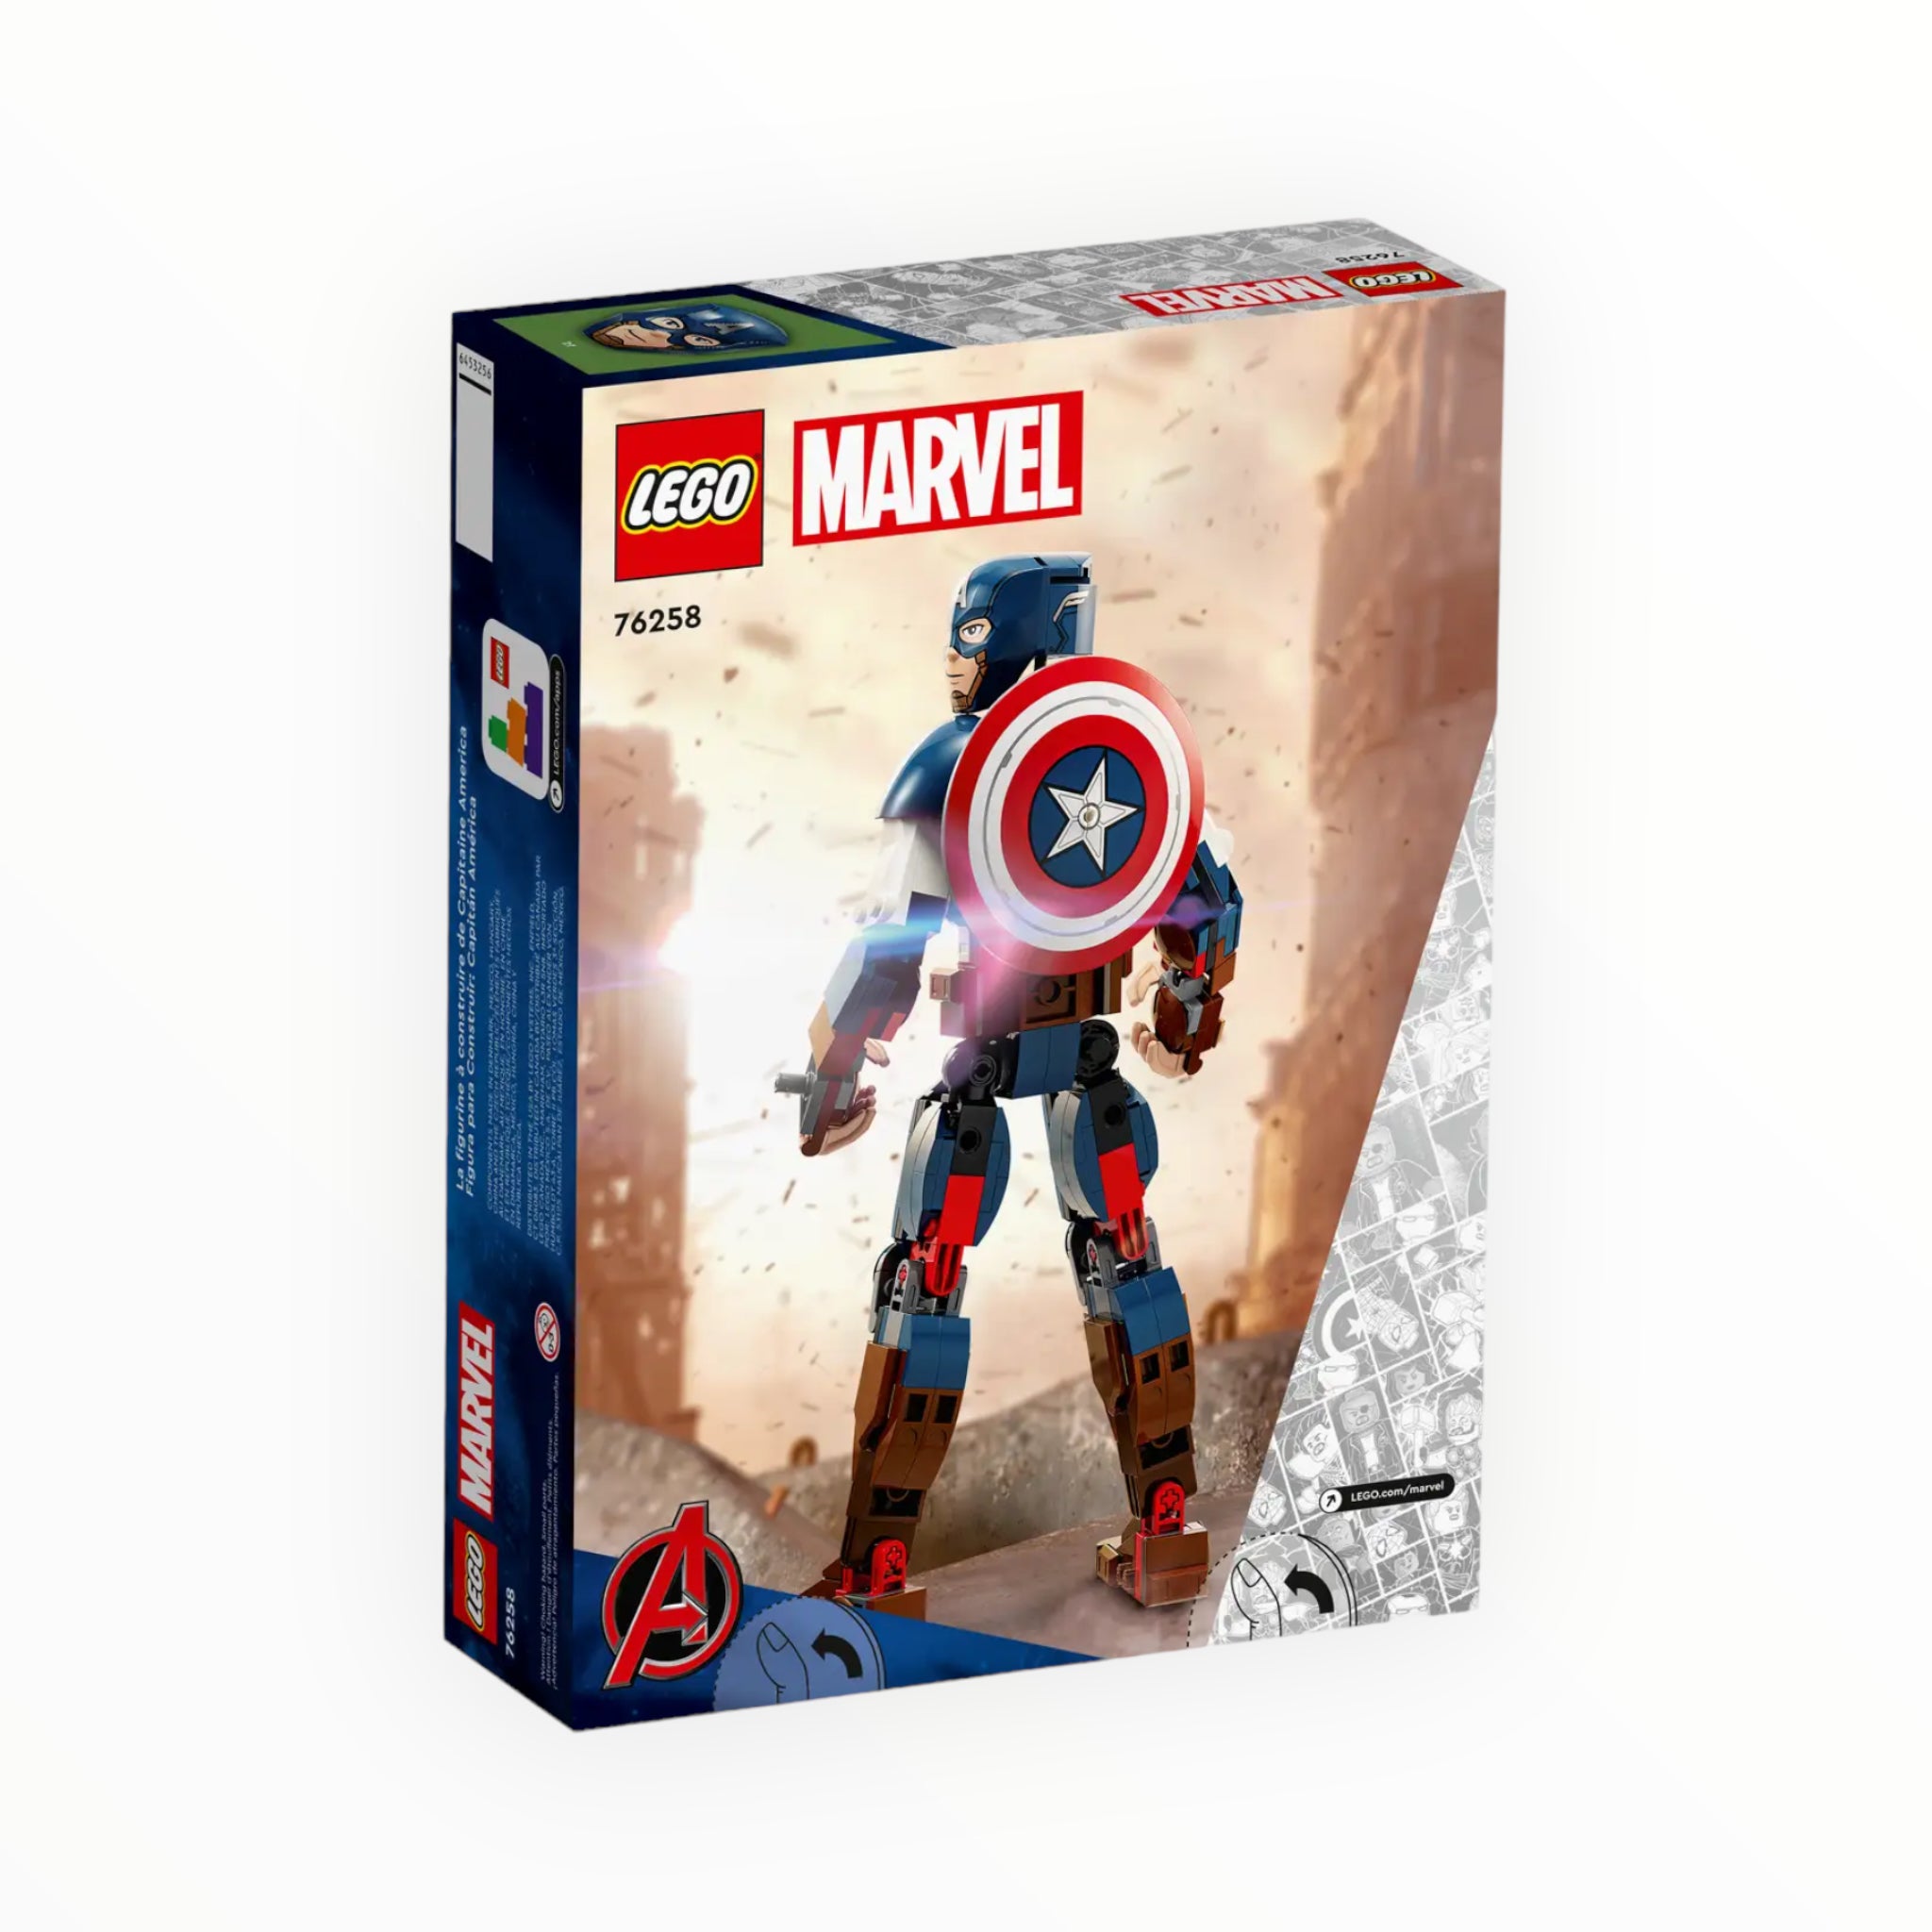 76258 Marvel Captain America Construction Figure